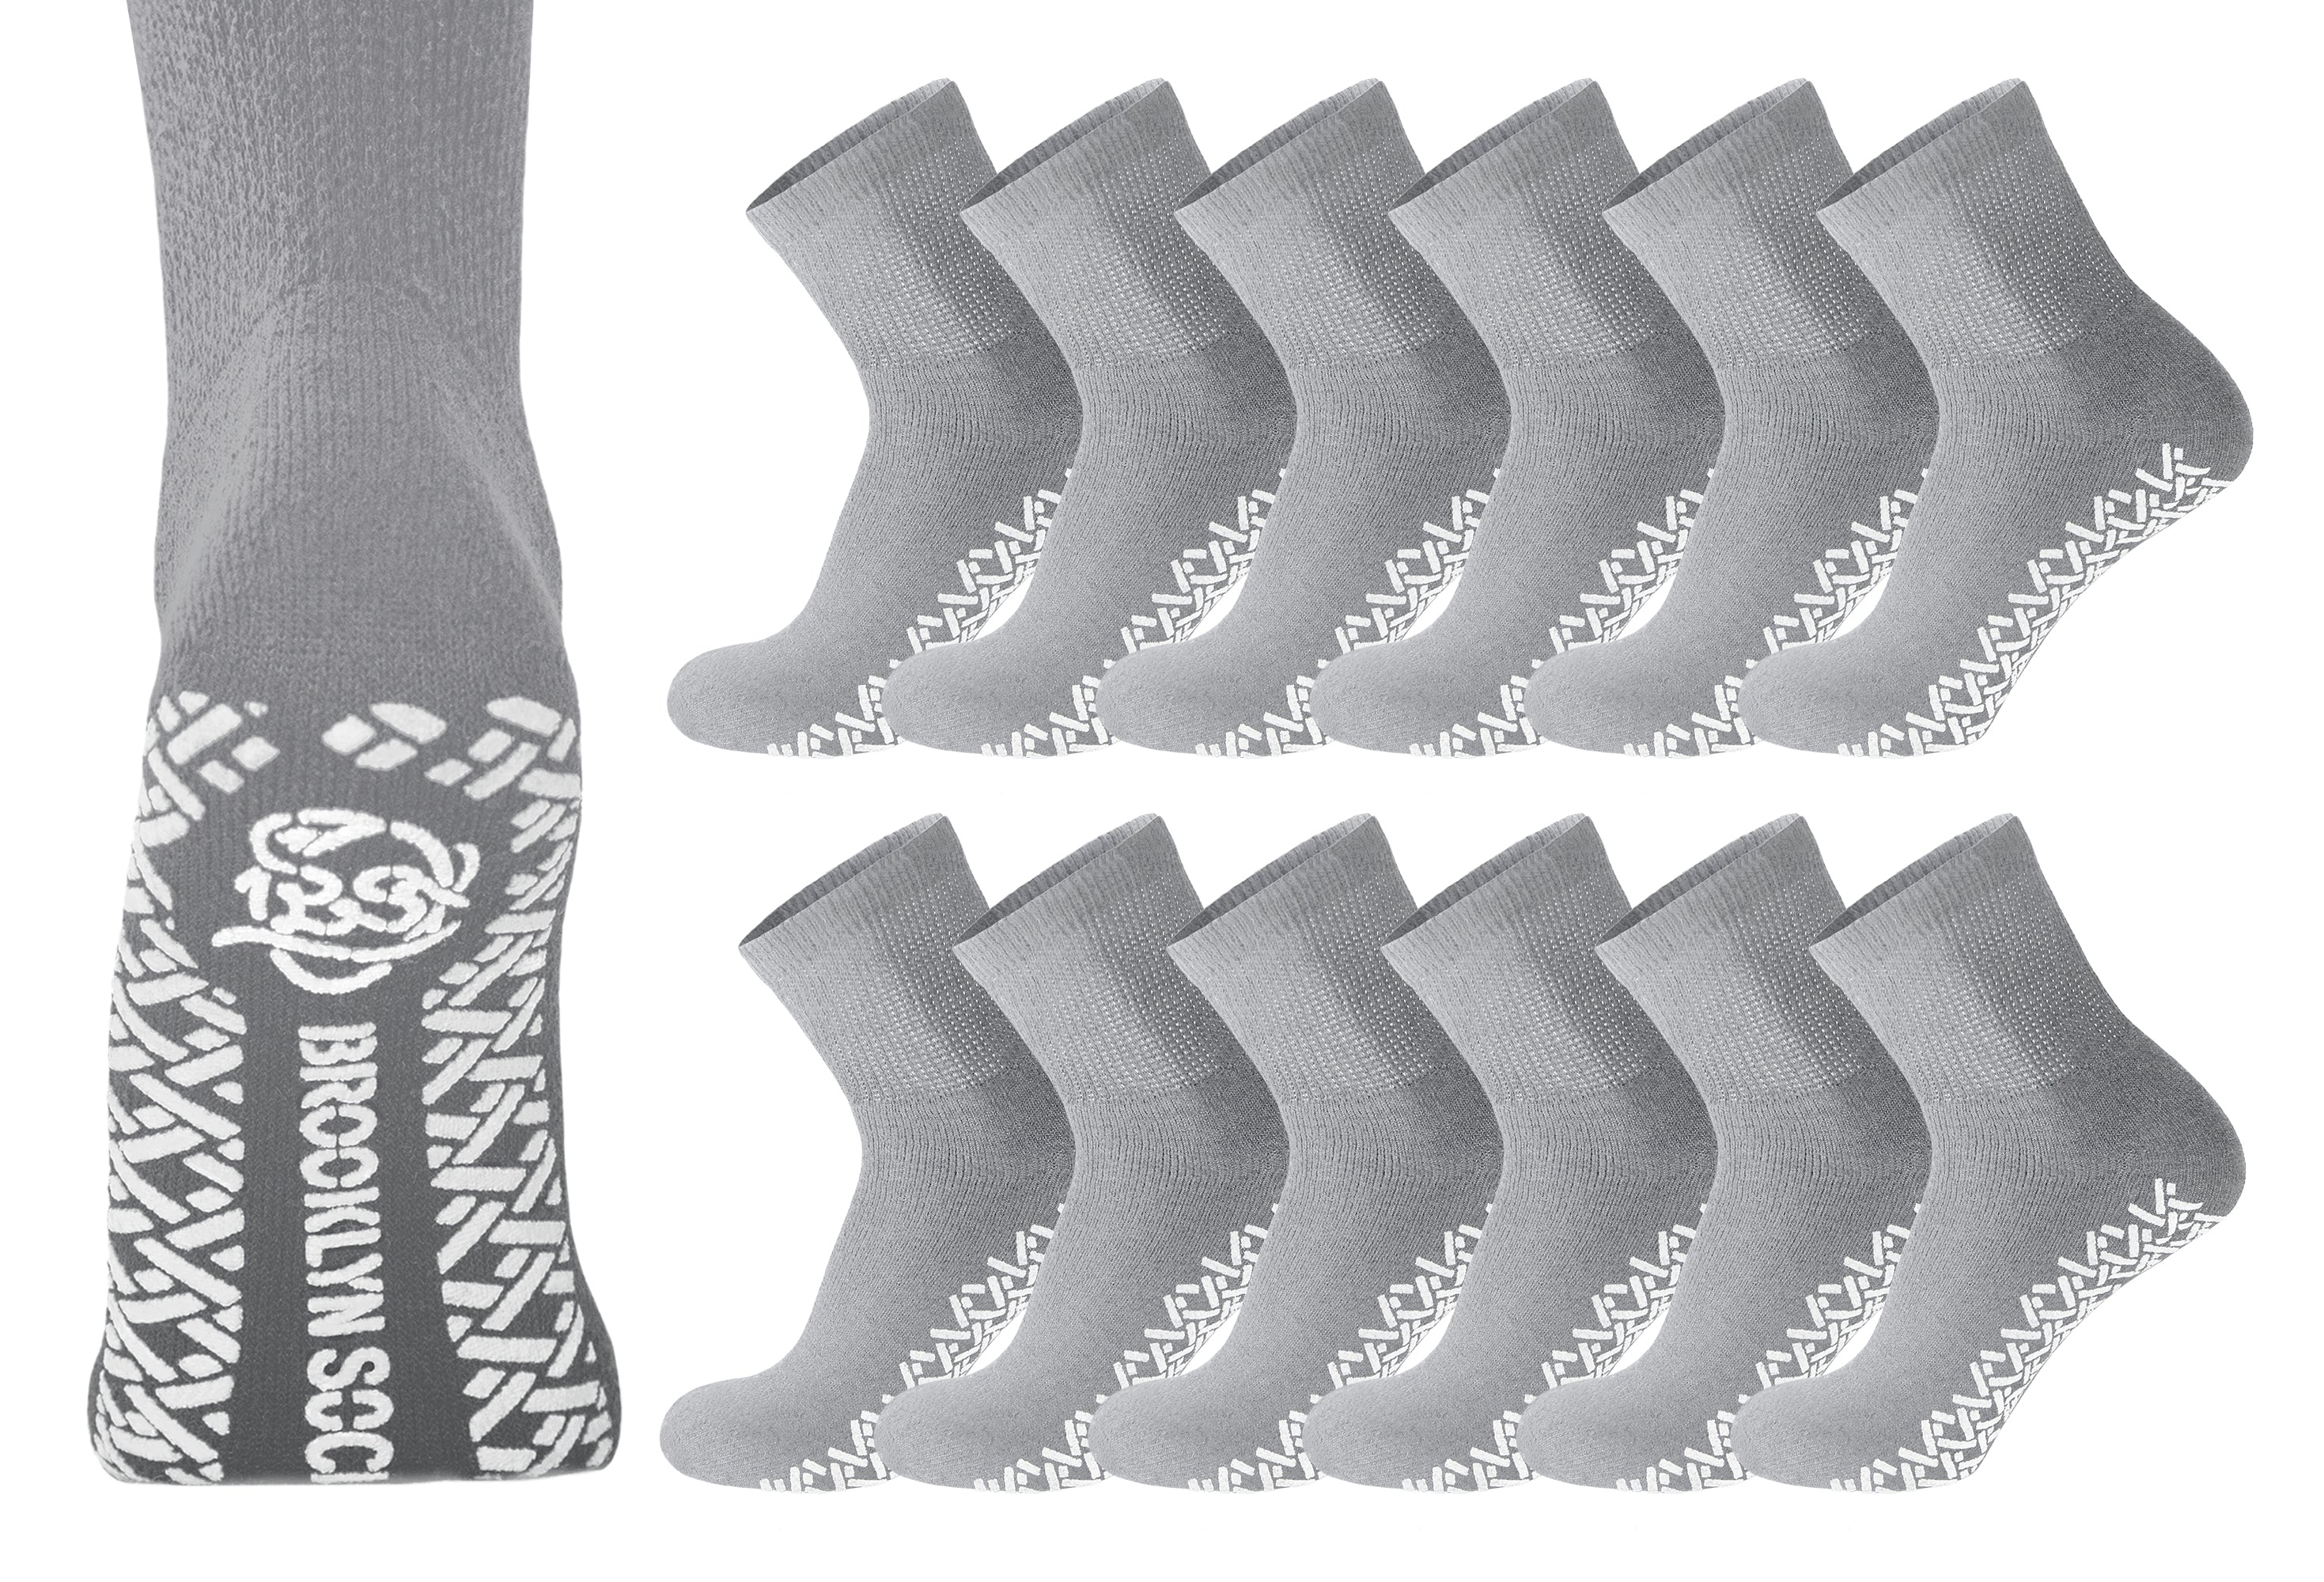 6 Pairs of Womens Diabetic Non Skid/Slip Medical Cotton Quarter Crew Length  Socks Rubber Gripper Bottom Hospital Fit's Shoe Size 6-9